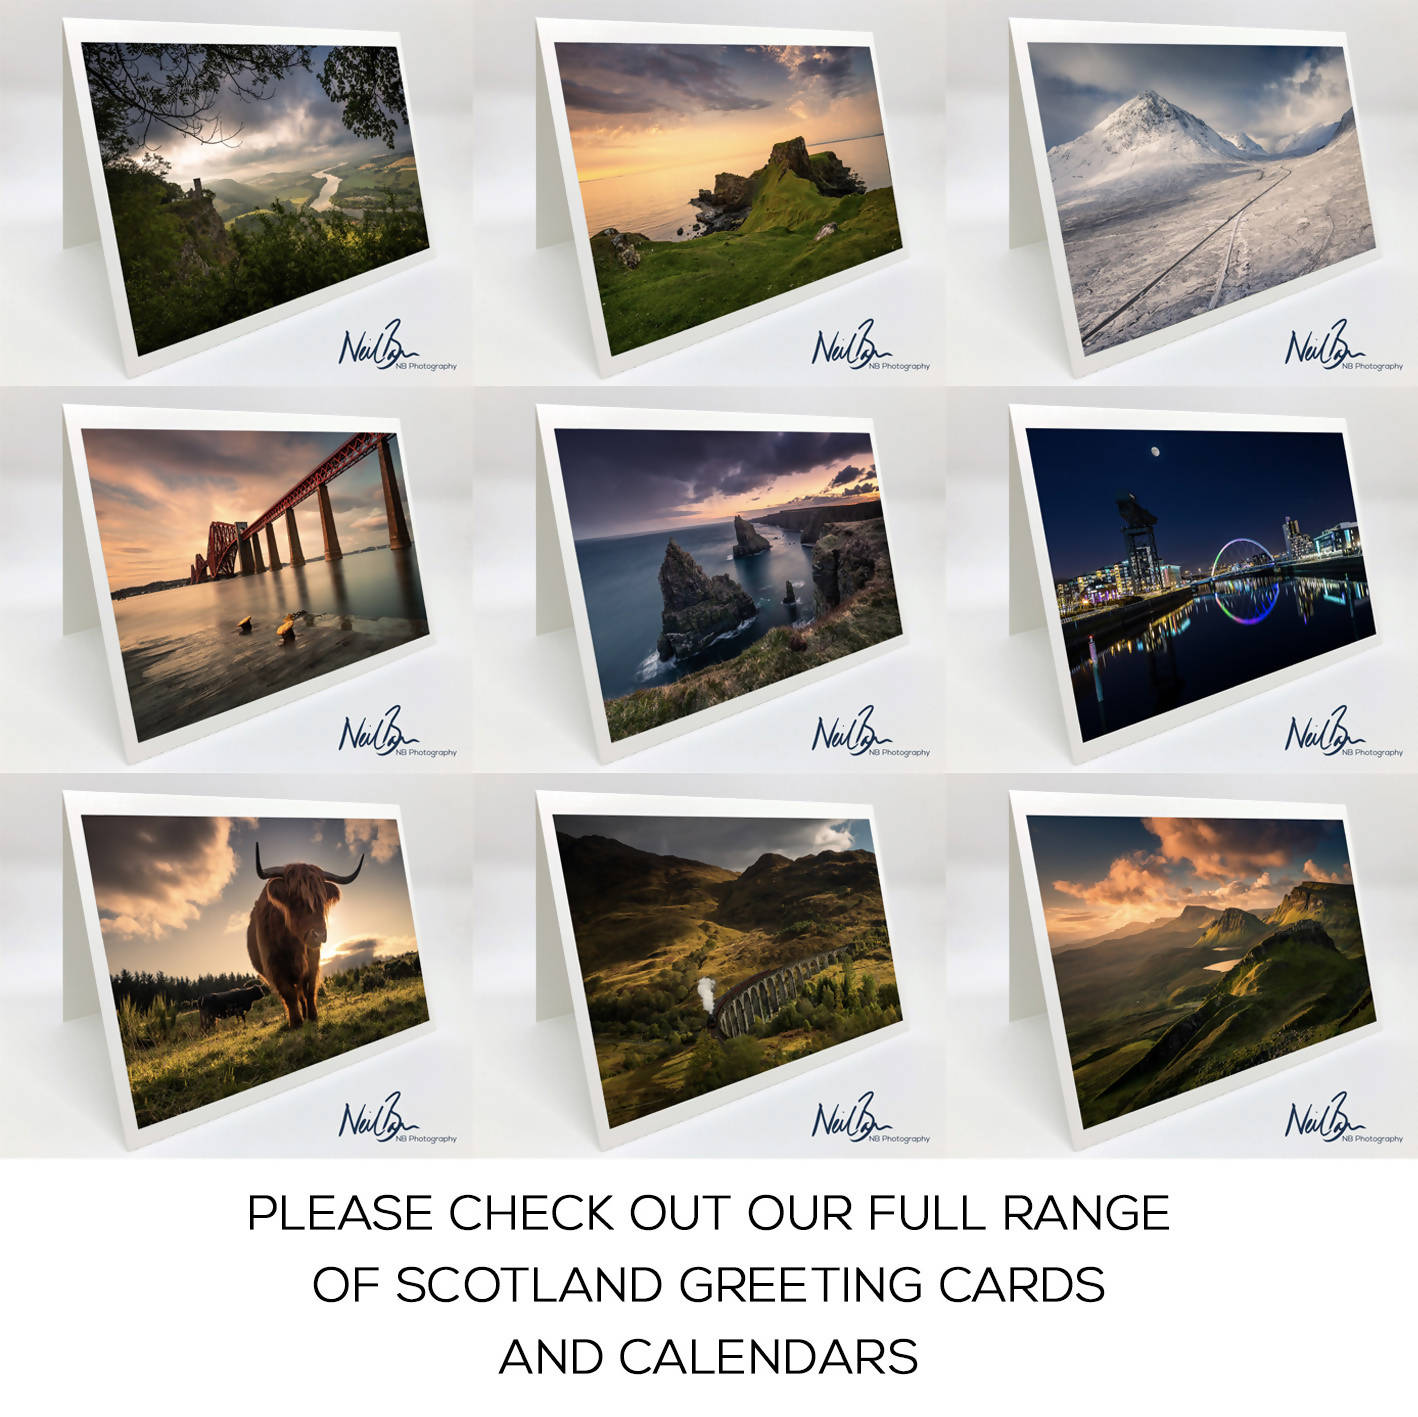 Holyrood Park, Edinburgh - Scotland Greeting Card - Blank Inside